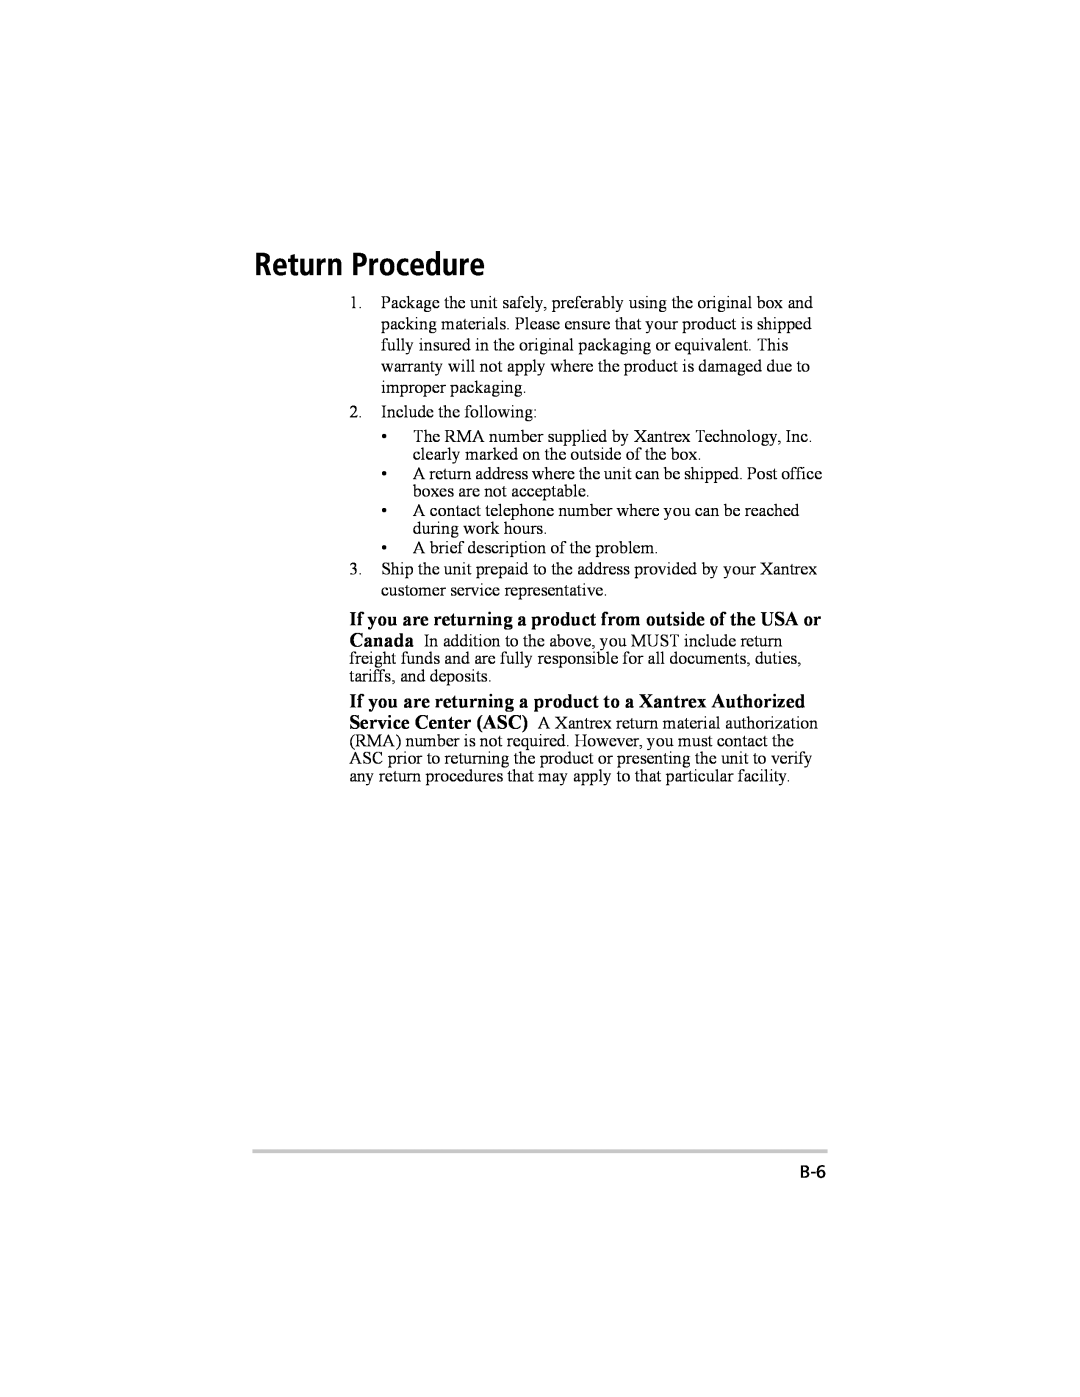 Xantrex Technology 200 manual Return Procedure 